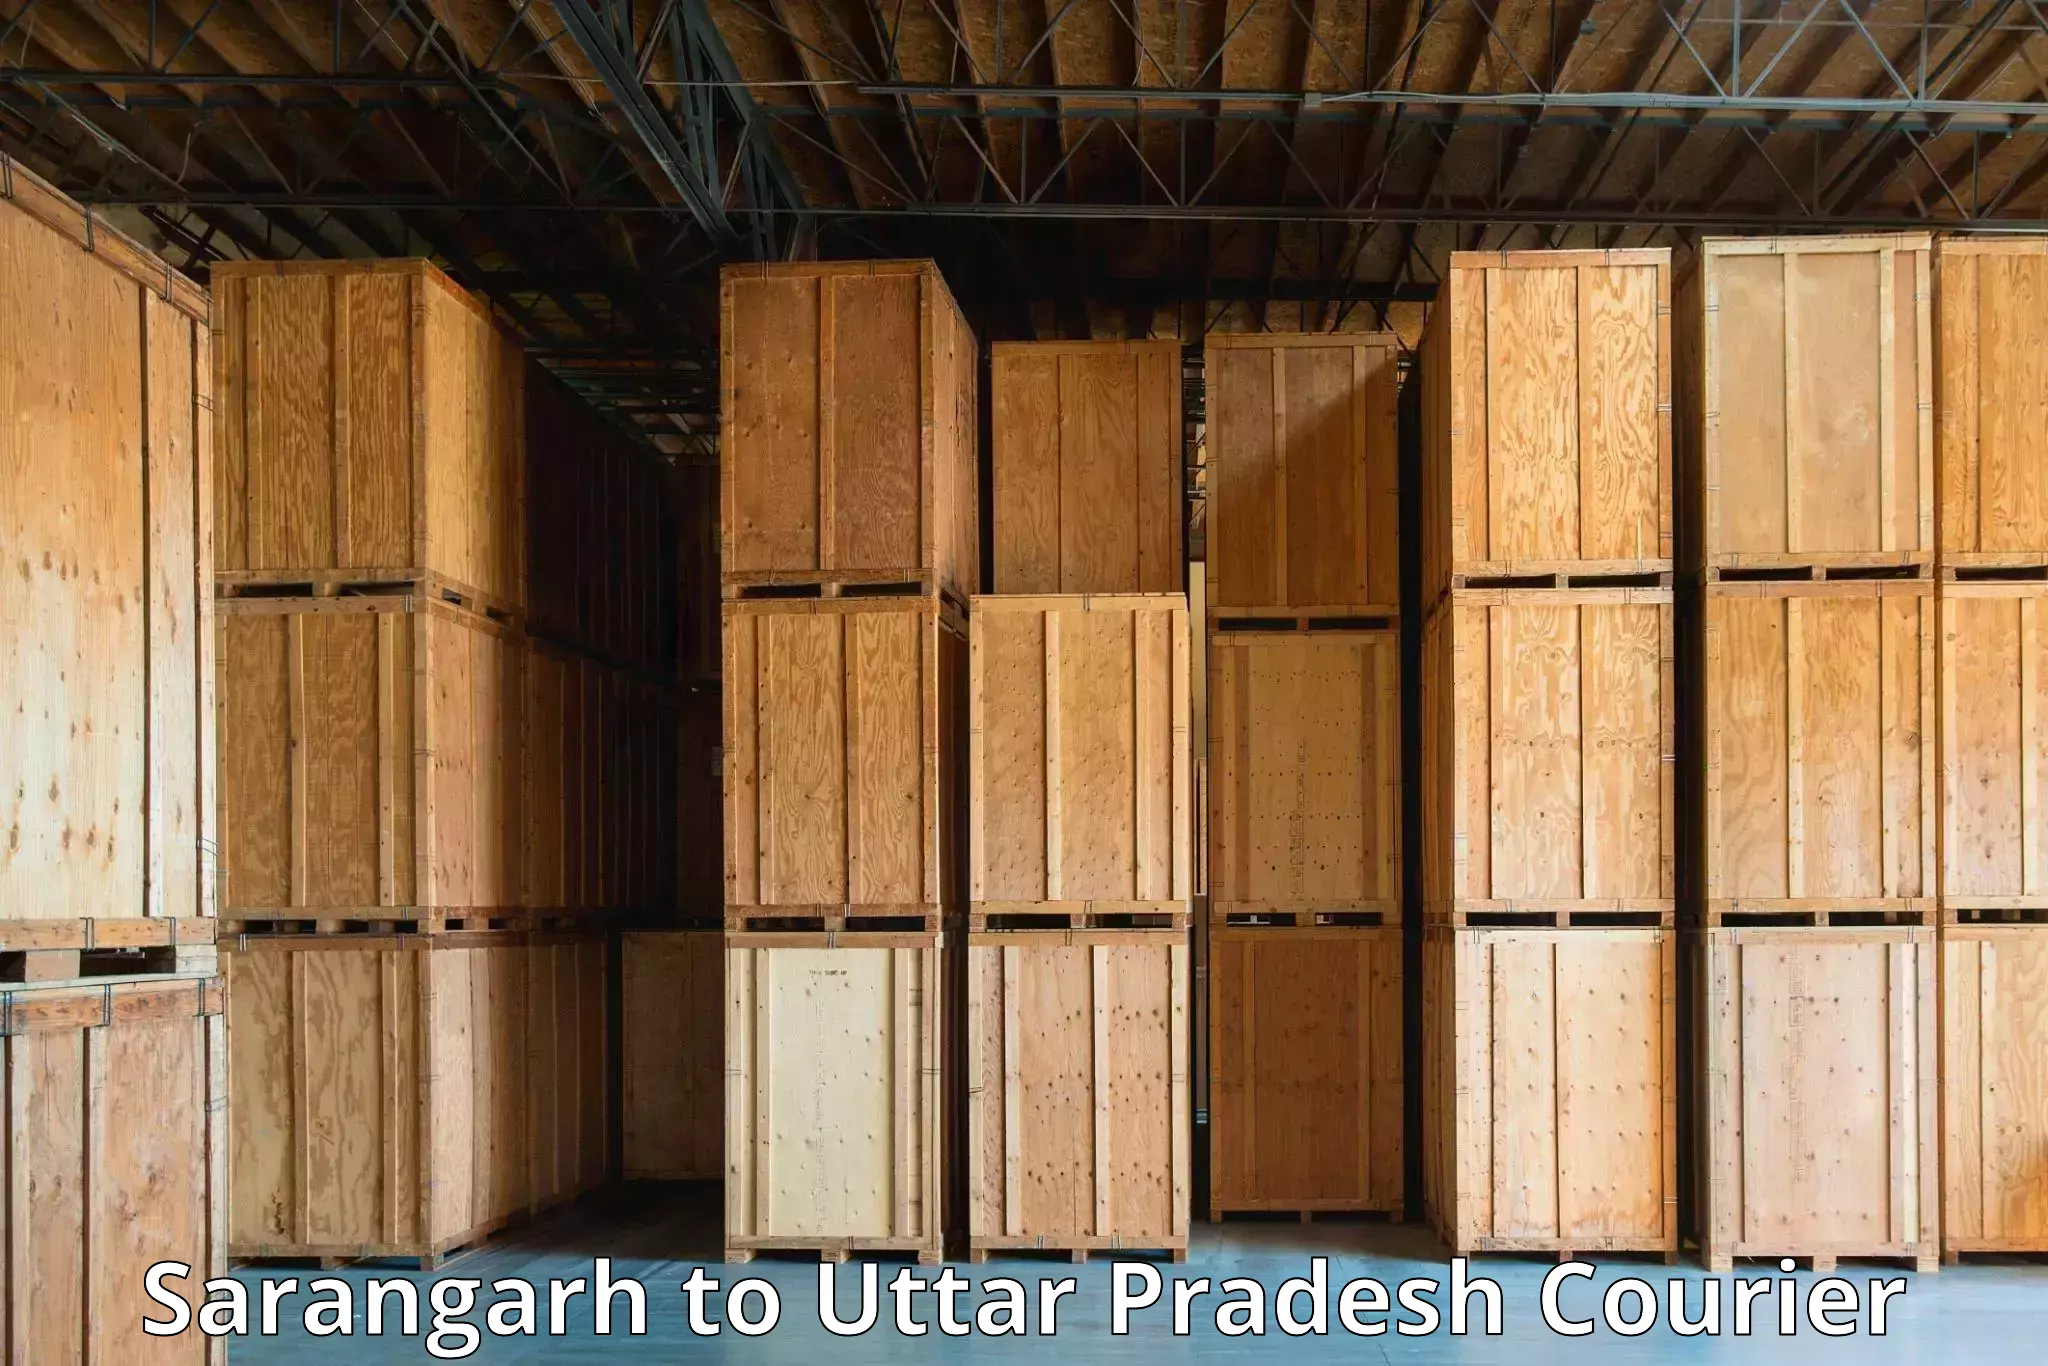 Online shipping calculator Sarangarh to Agra